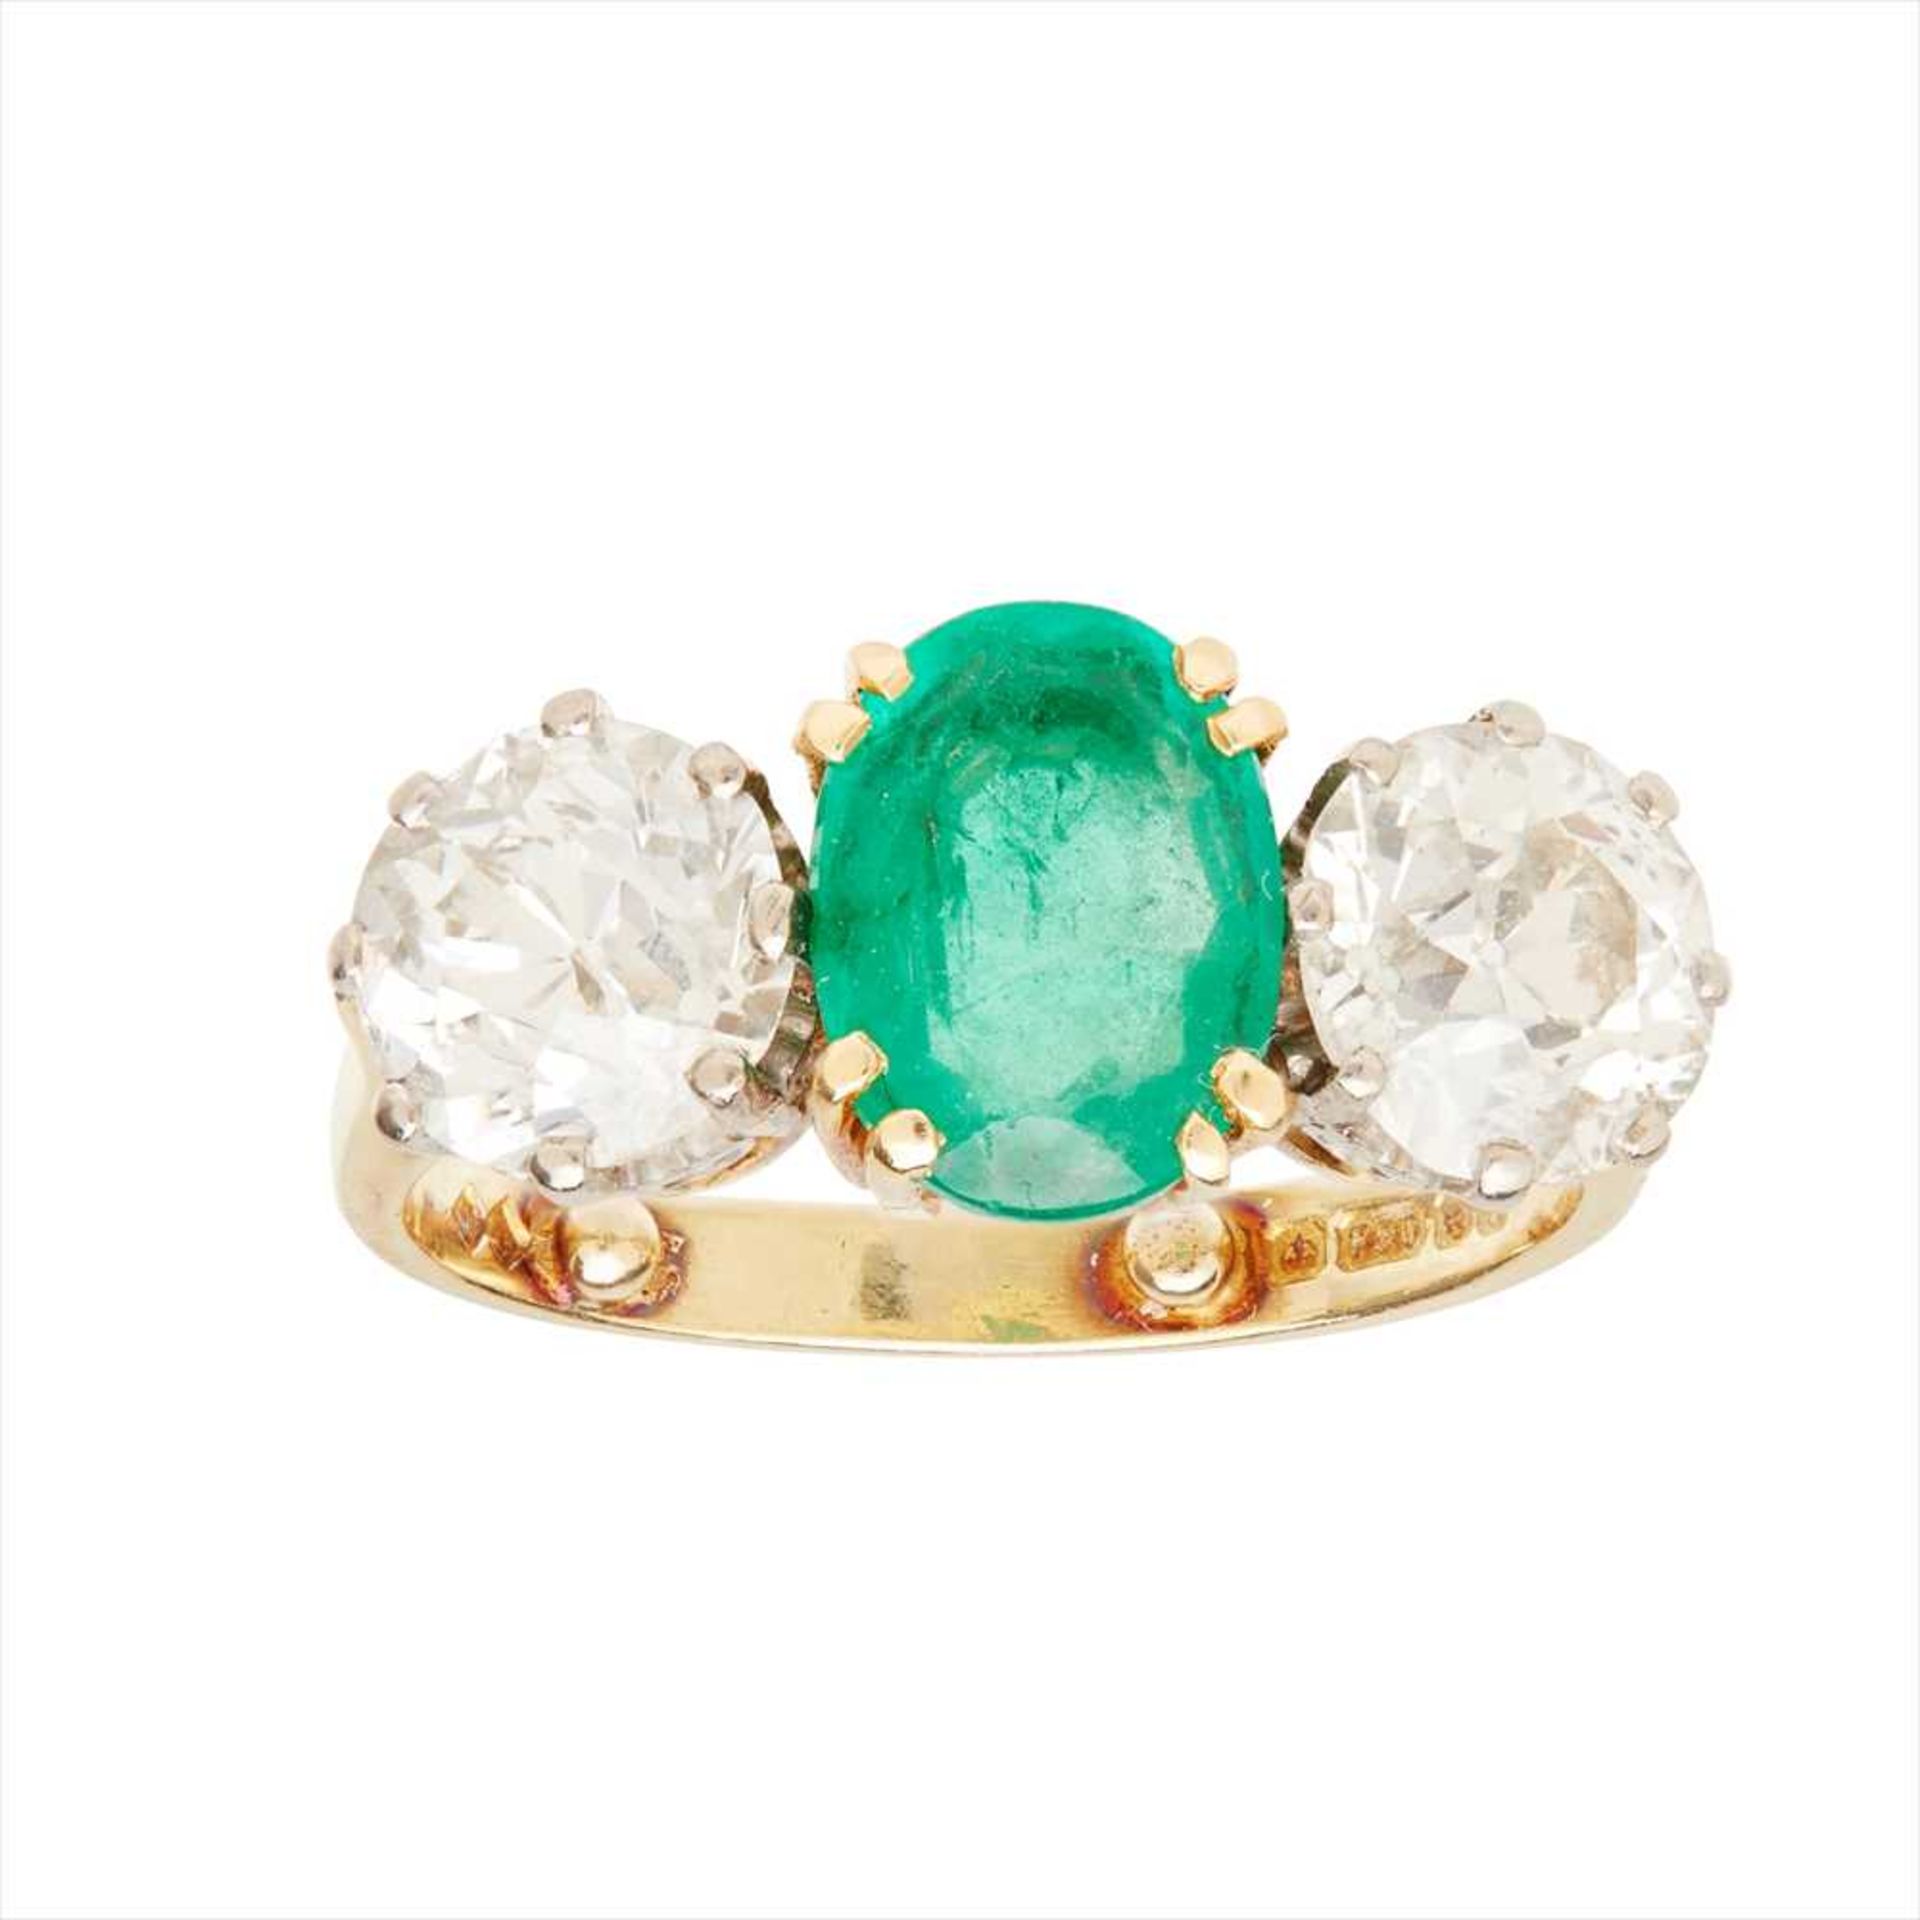 An emerald and diamond set three stone ring